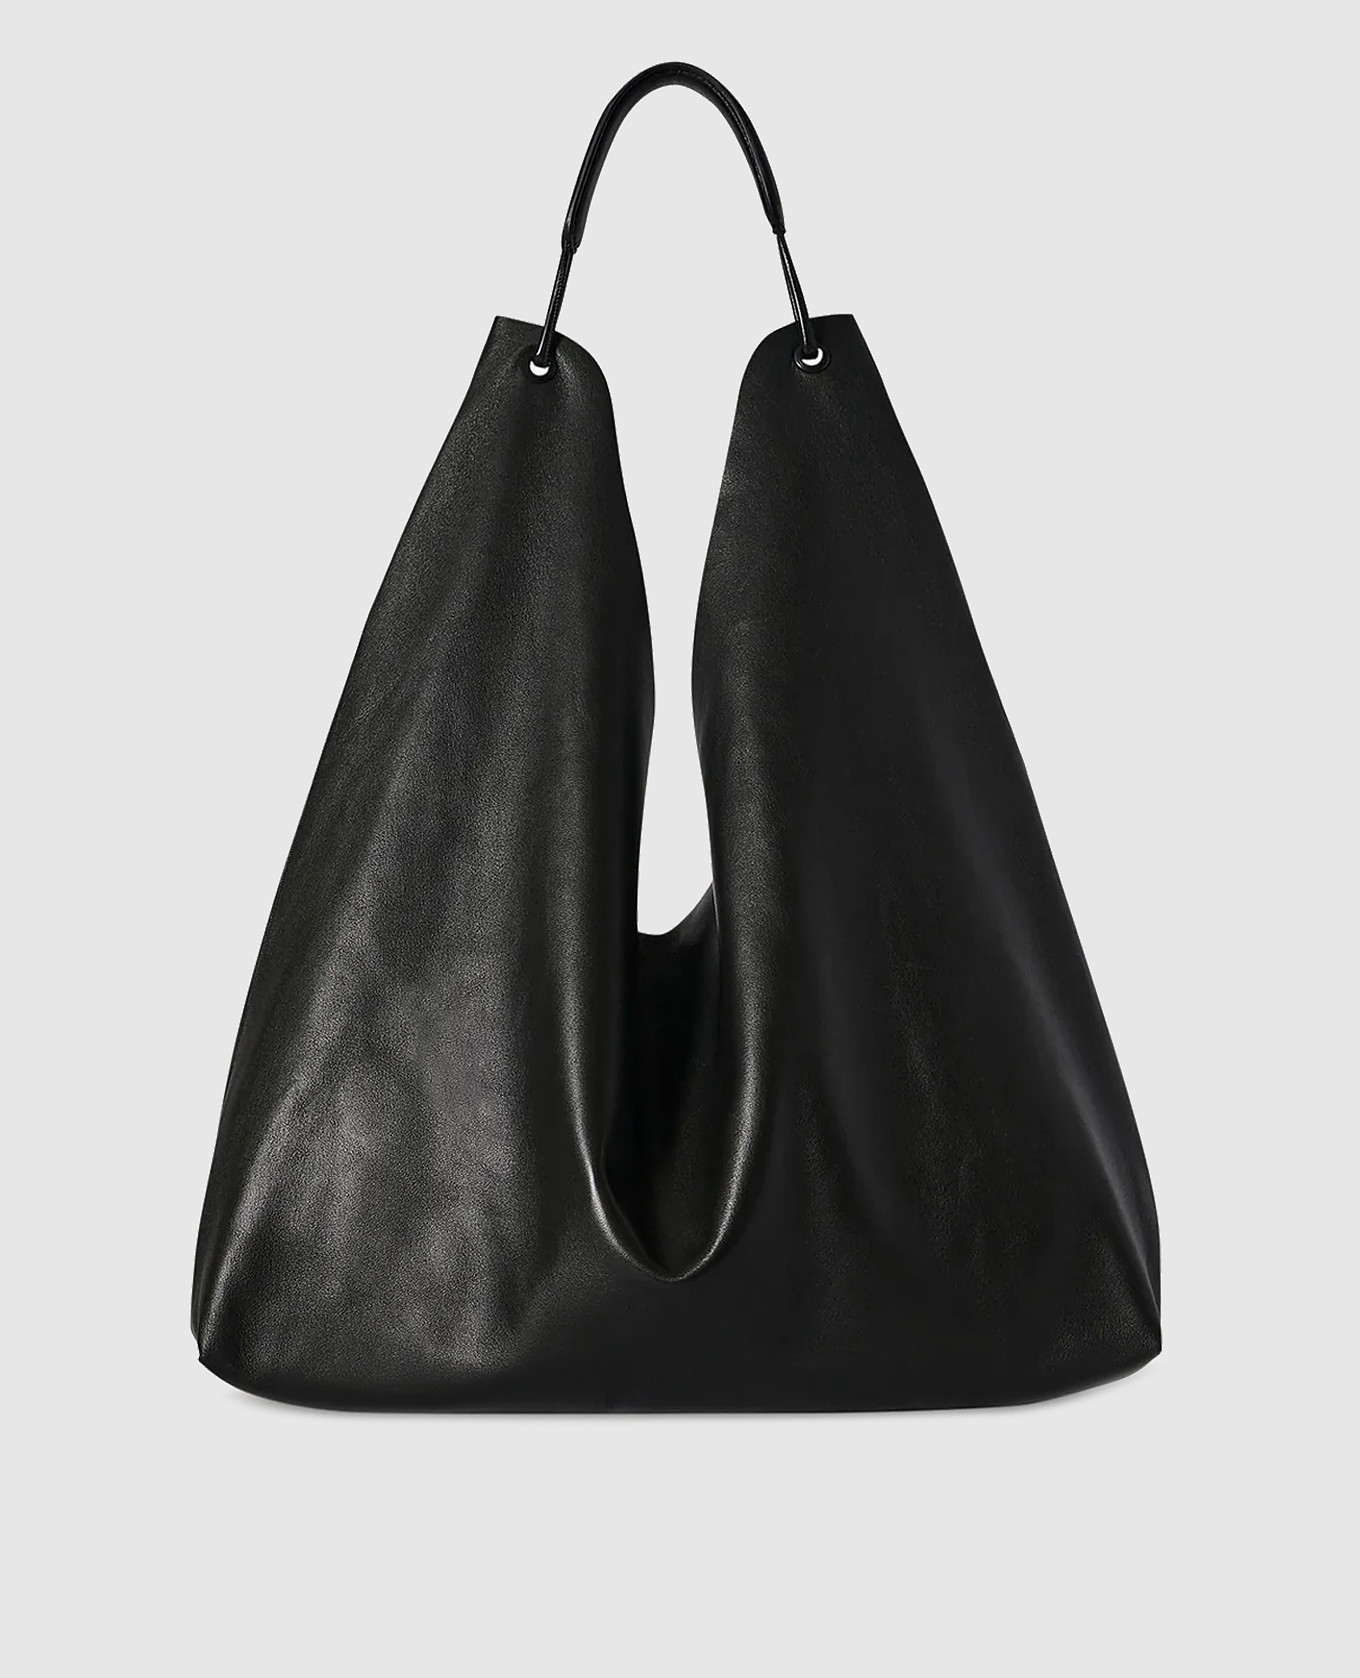 Bindle 3 black leather bag